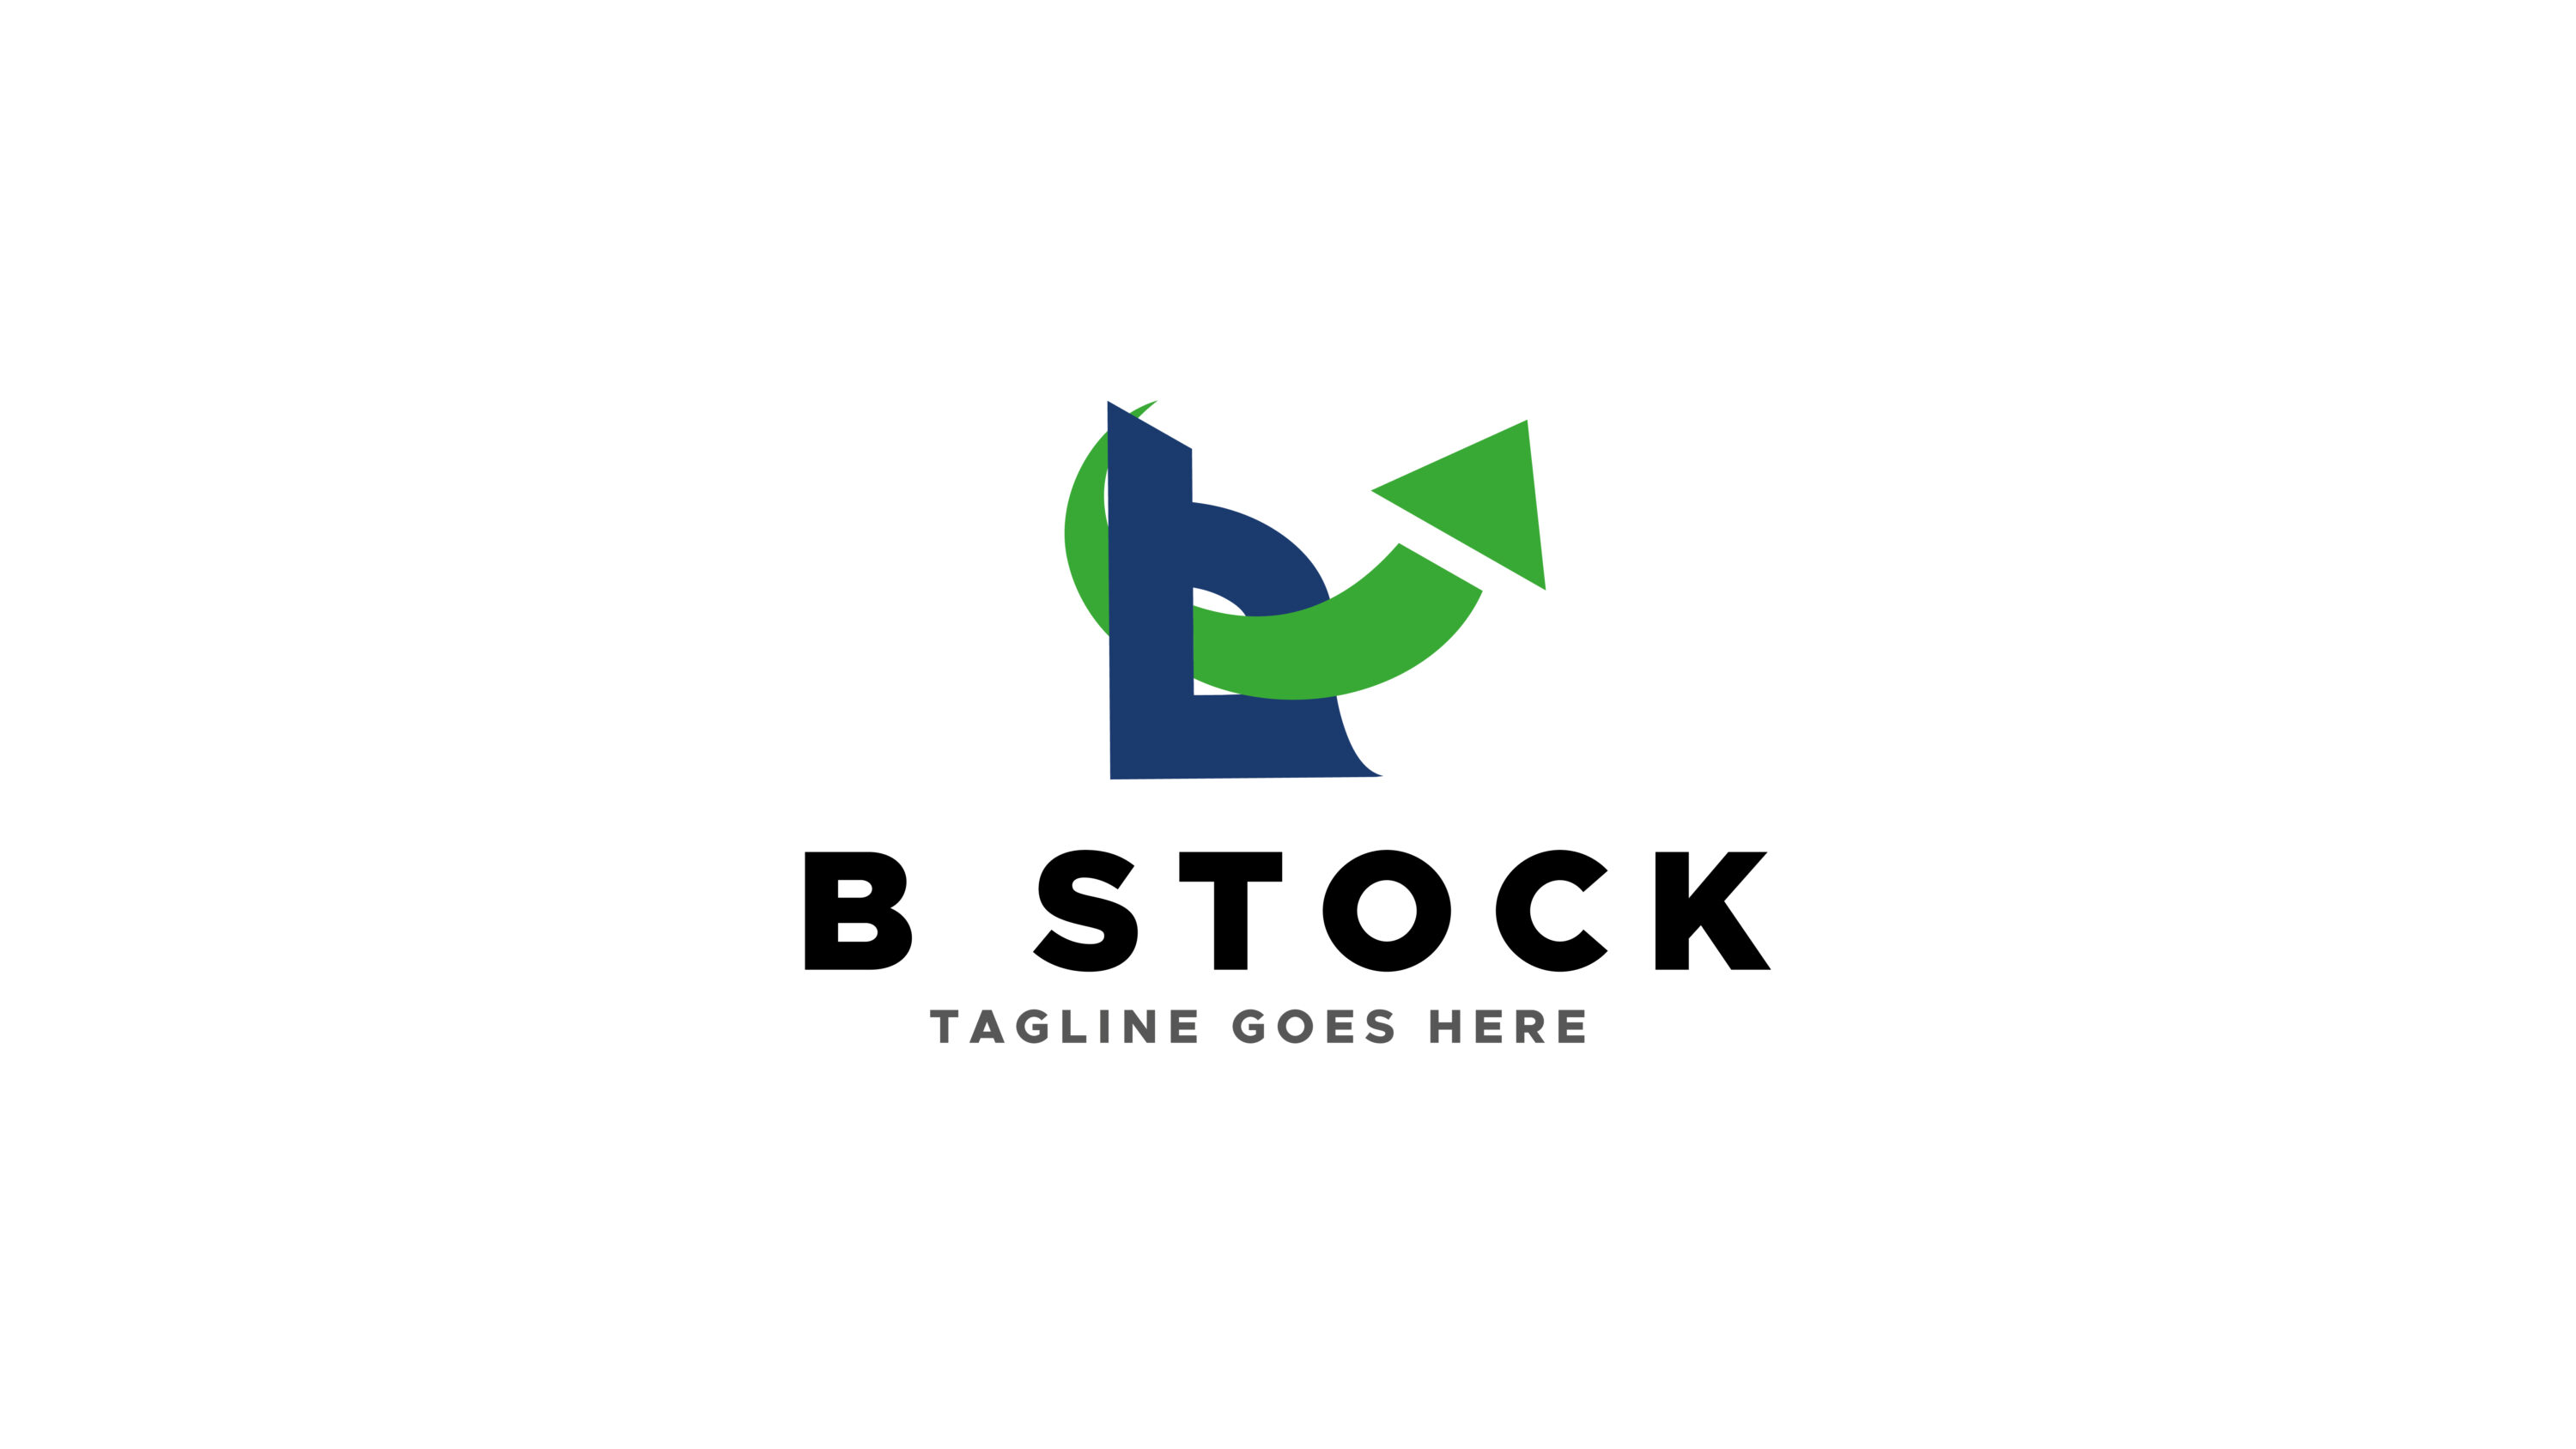 B Letter Logo - B Stock Professional Logo Design Only 10$, dark blue letter with green arrow logo.